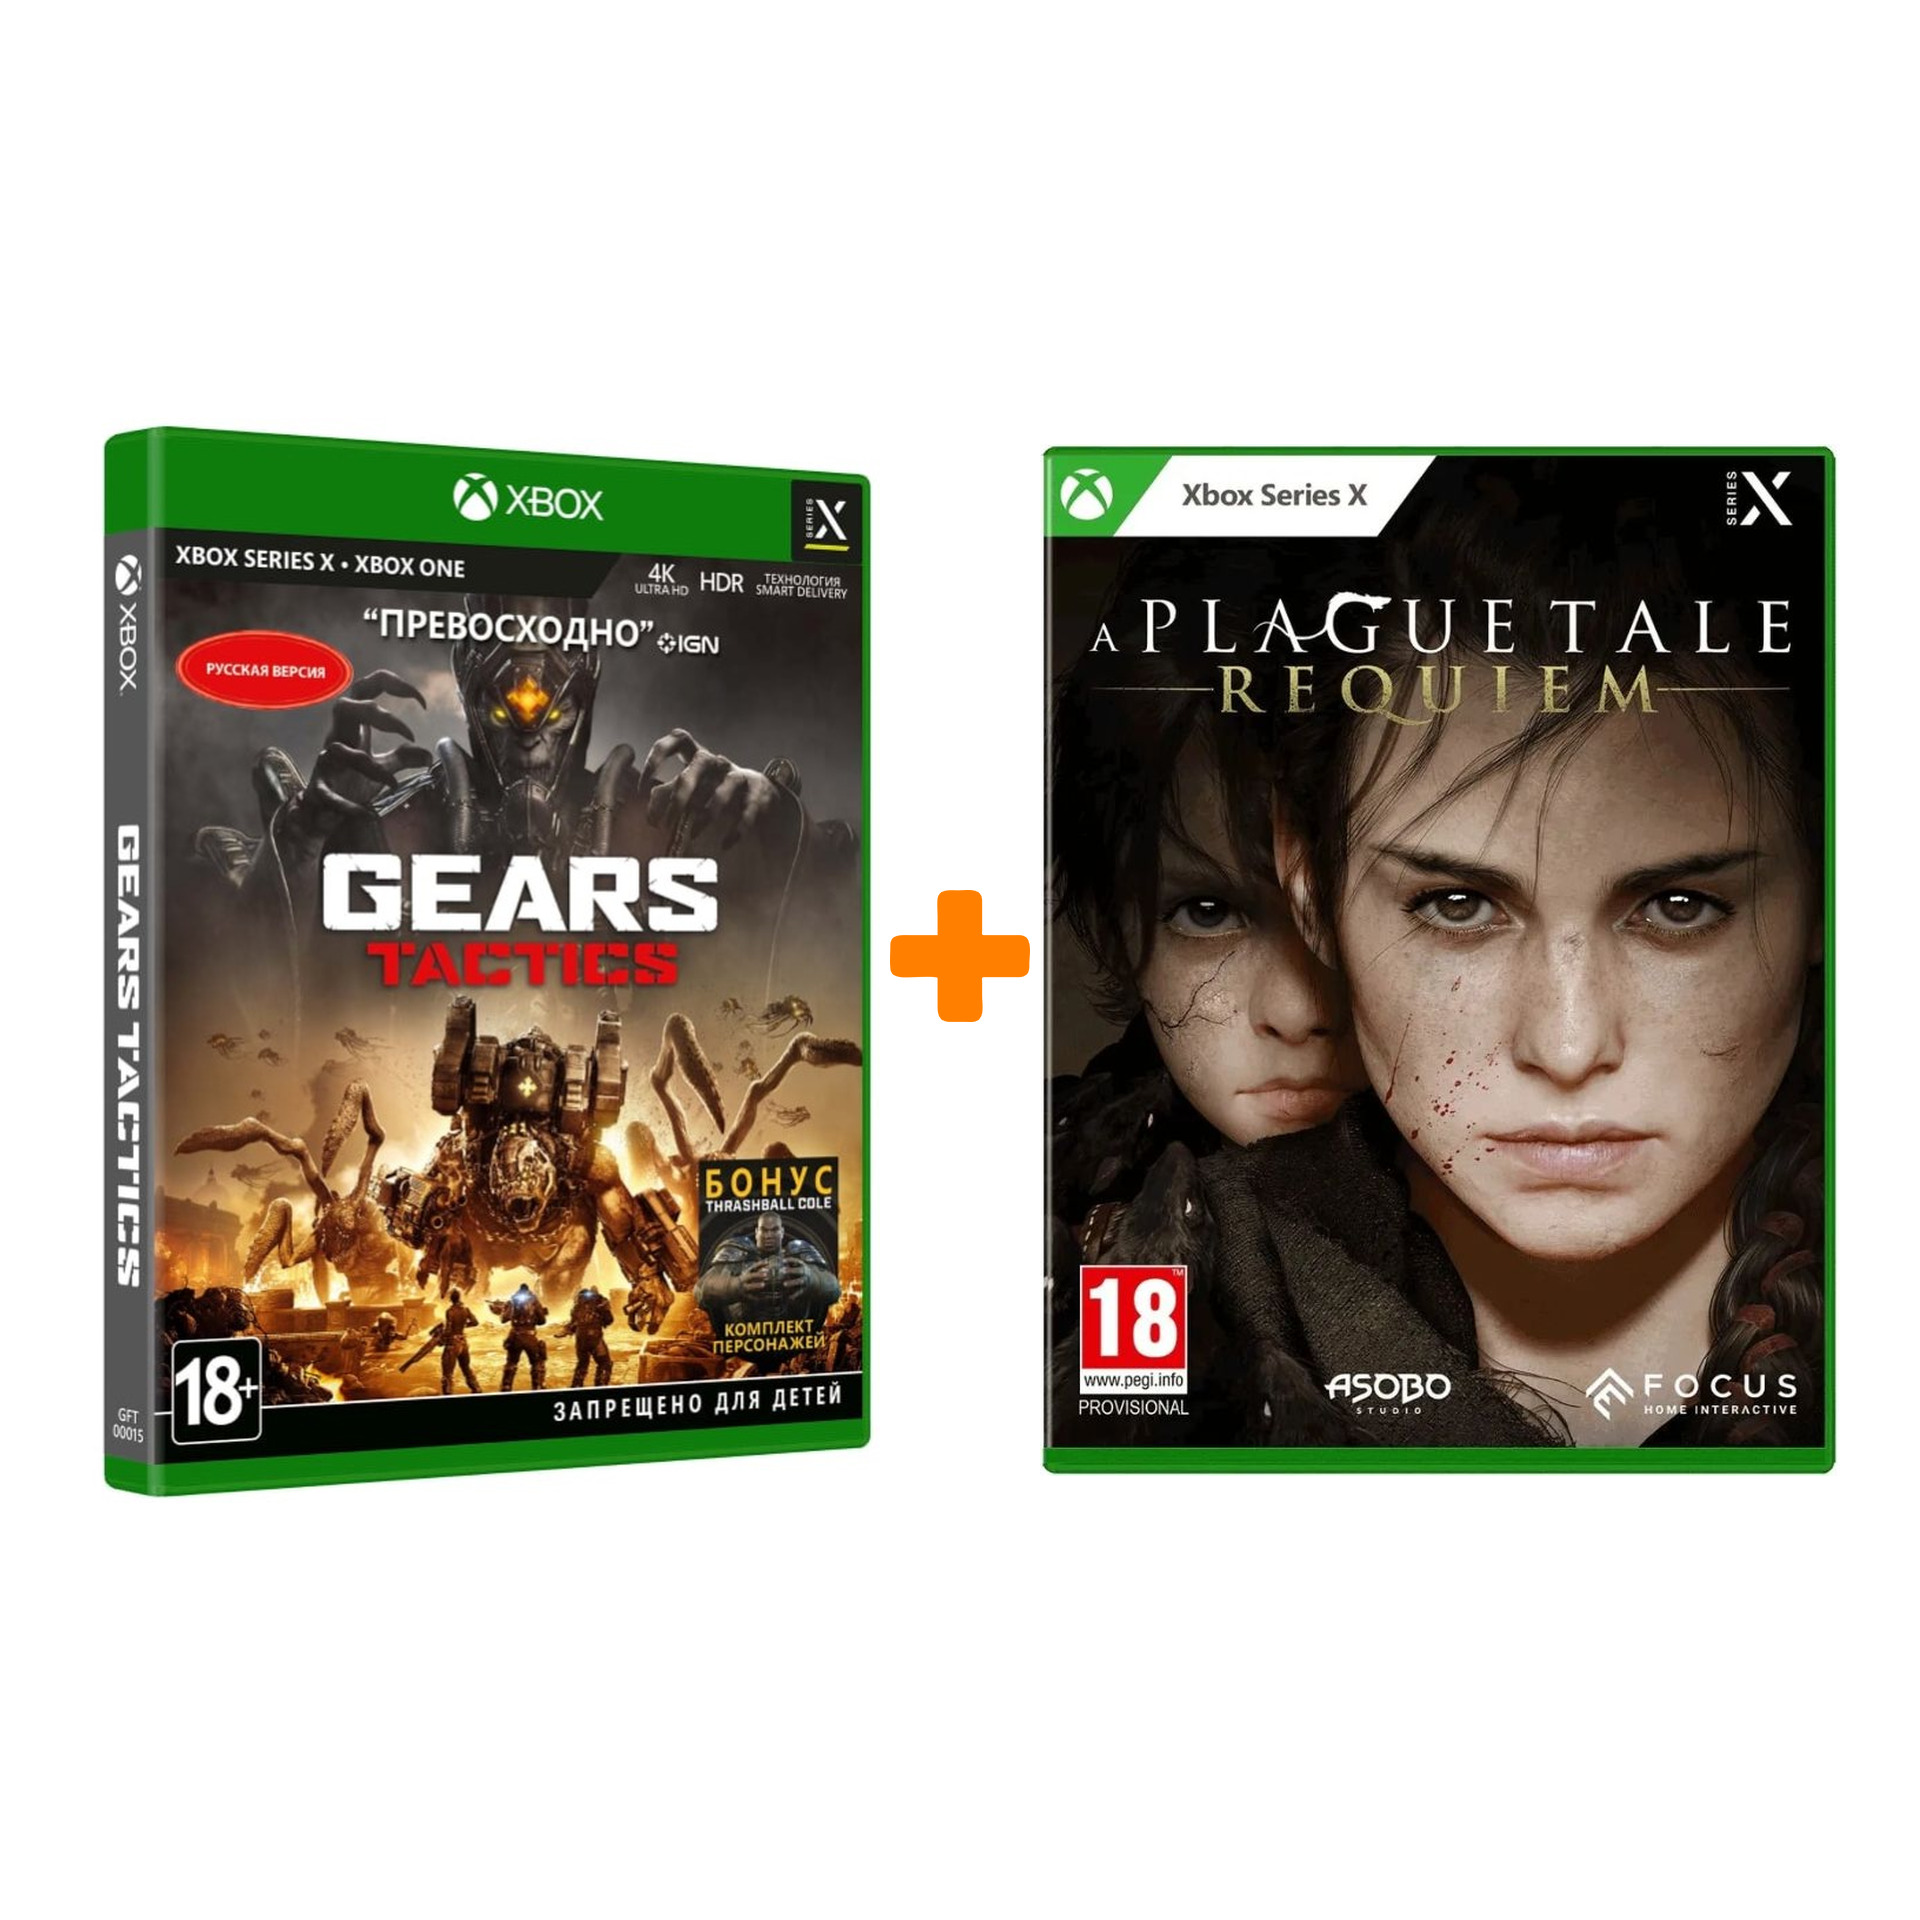 A Plague Tale: Requiem [Xbox Series X] + Gears Tactics [Xbox] – Набор